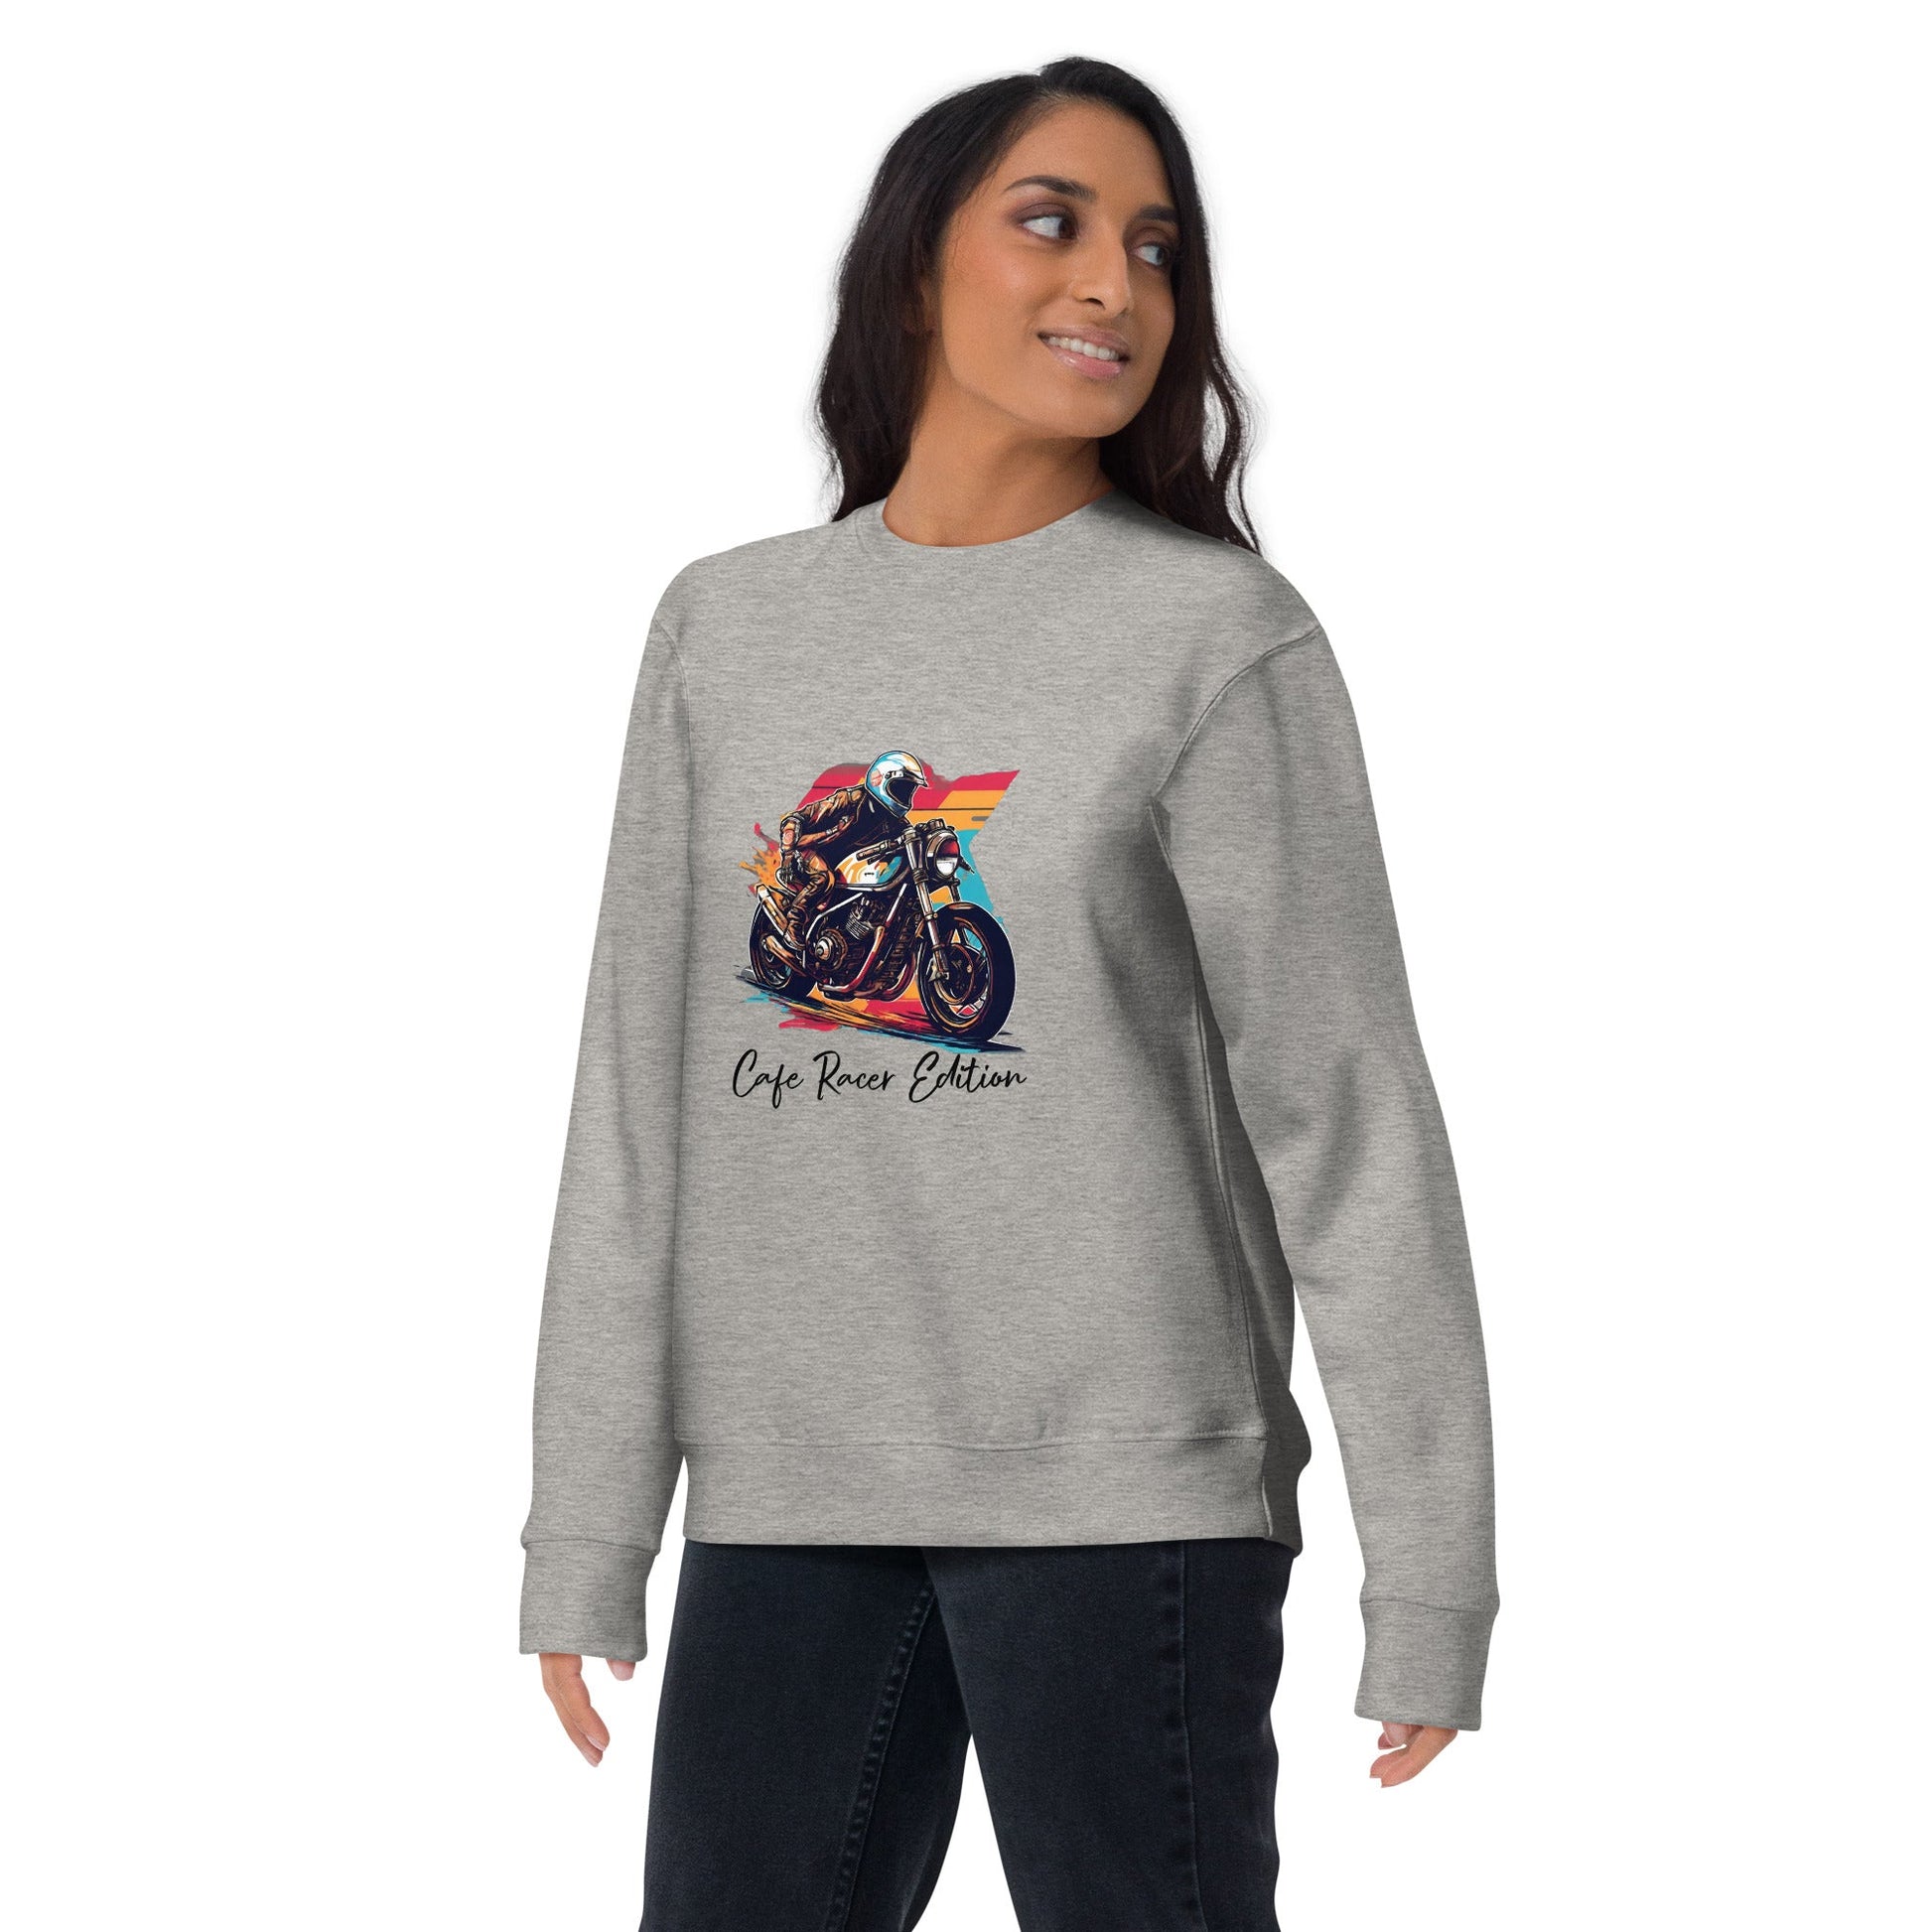 Unisex Premium Sweatshirt - Cafe Racer Edition - The Vandi Company